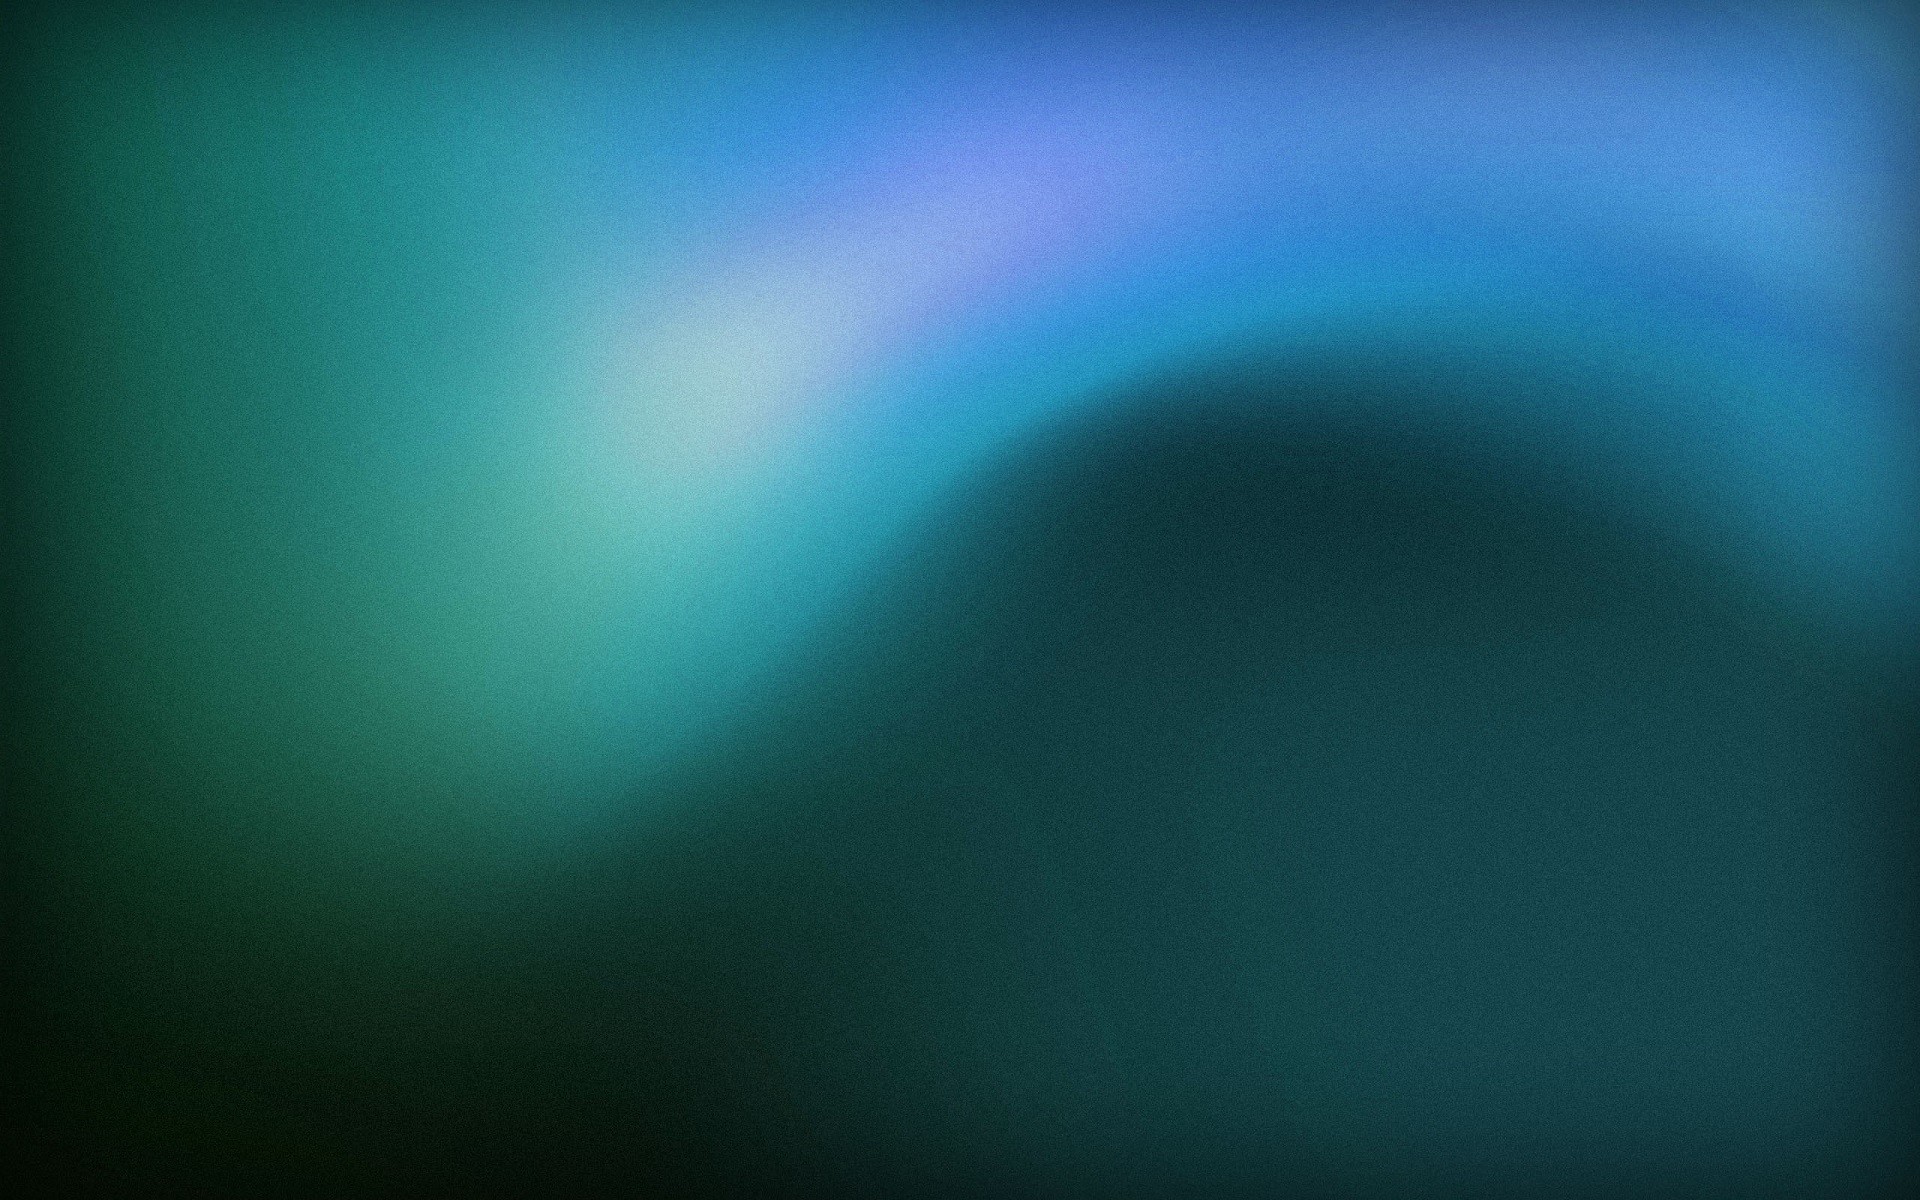 ubuntu gnome fondo de pantalla,azul,verde,turquesa,cielo,agua